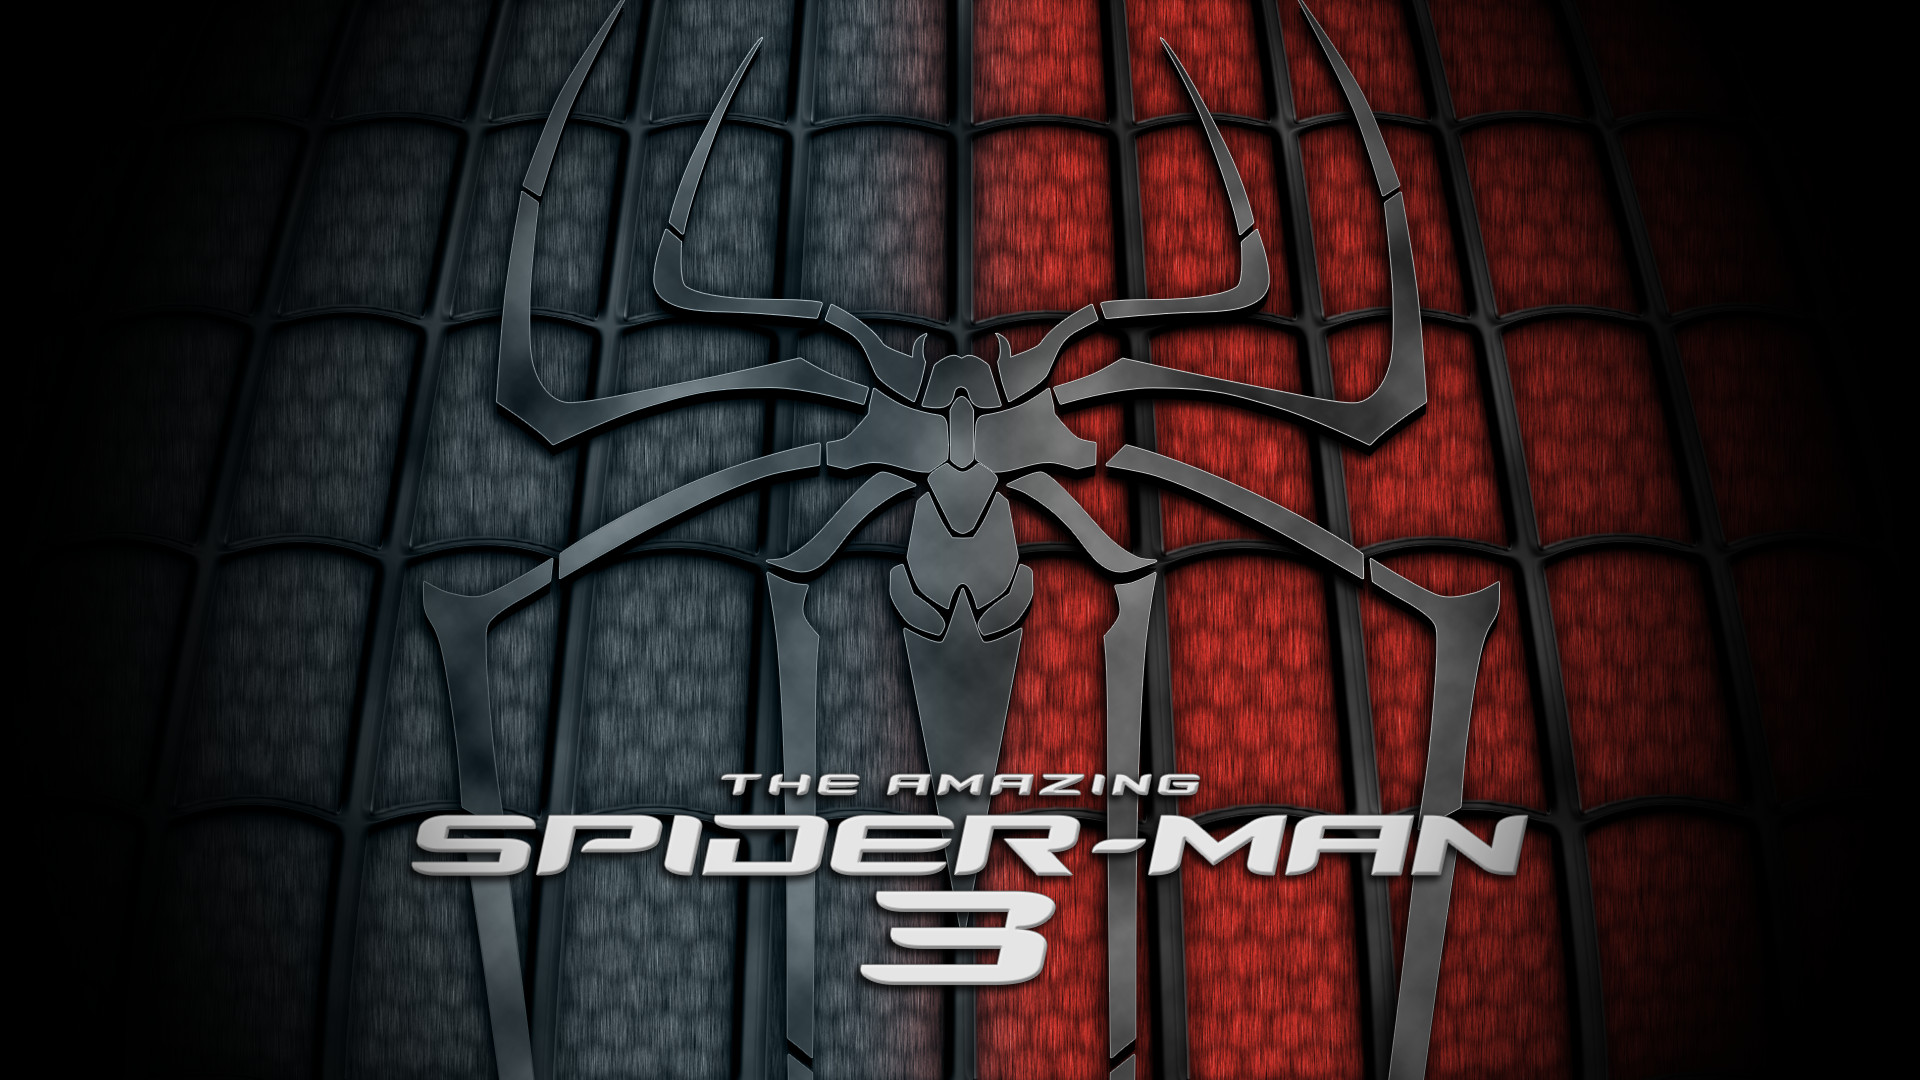 1920x1080 ... The Amazing Spiderman 3 (Wallpaper) by EmilyLena